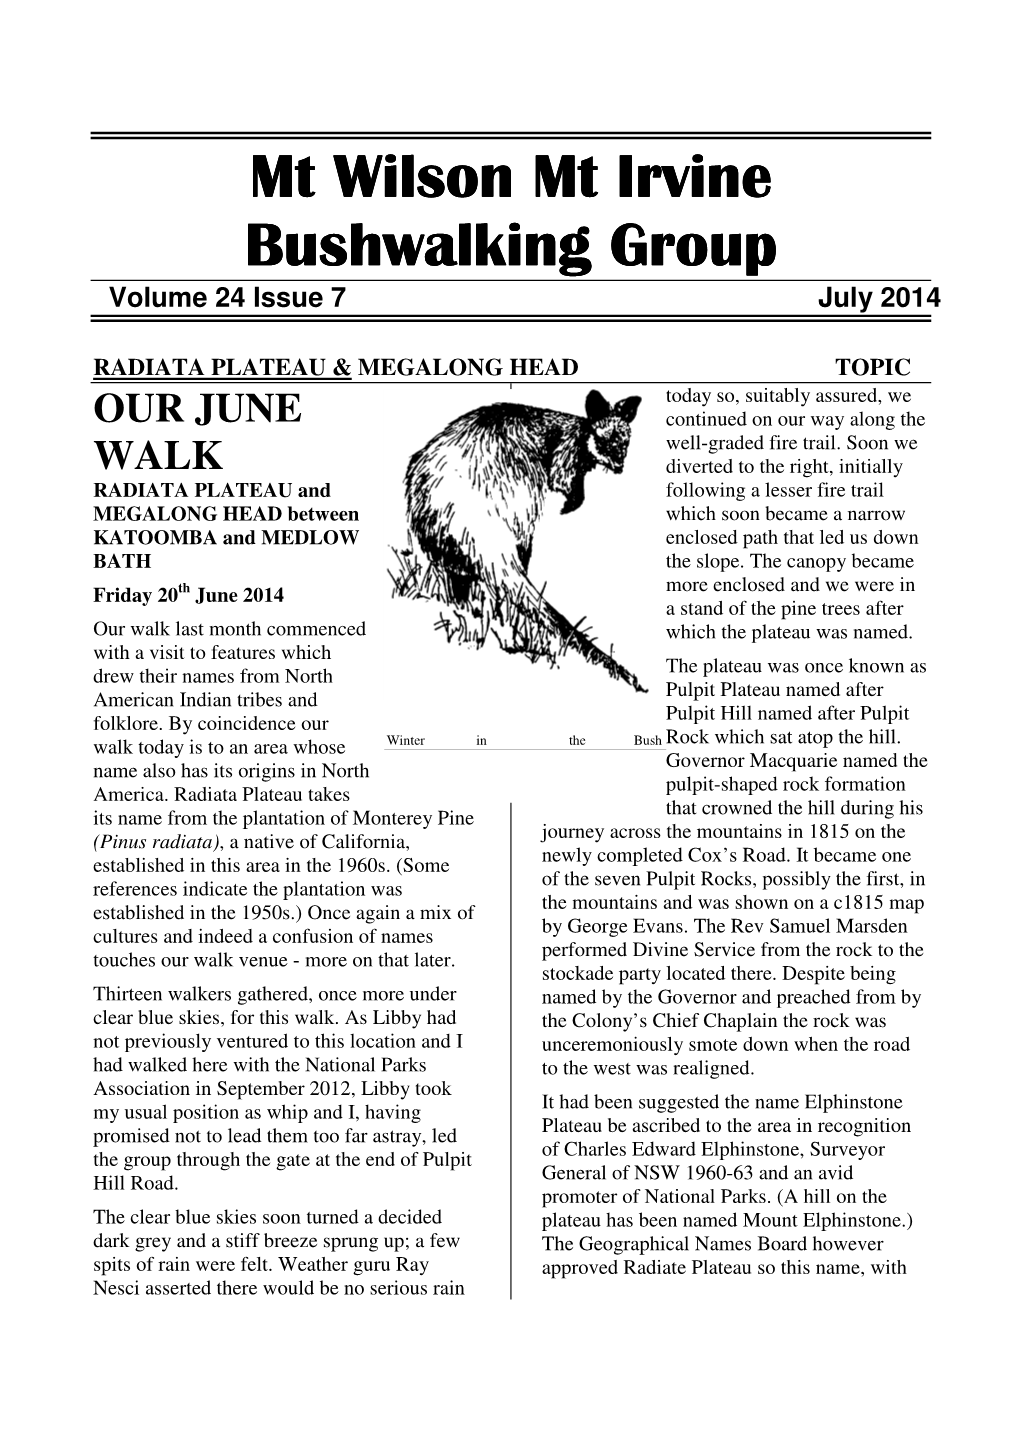 Mt Wilson Mt Irvine Bushwalking Group Volume 24 Issue 7 July 2014